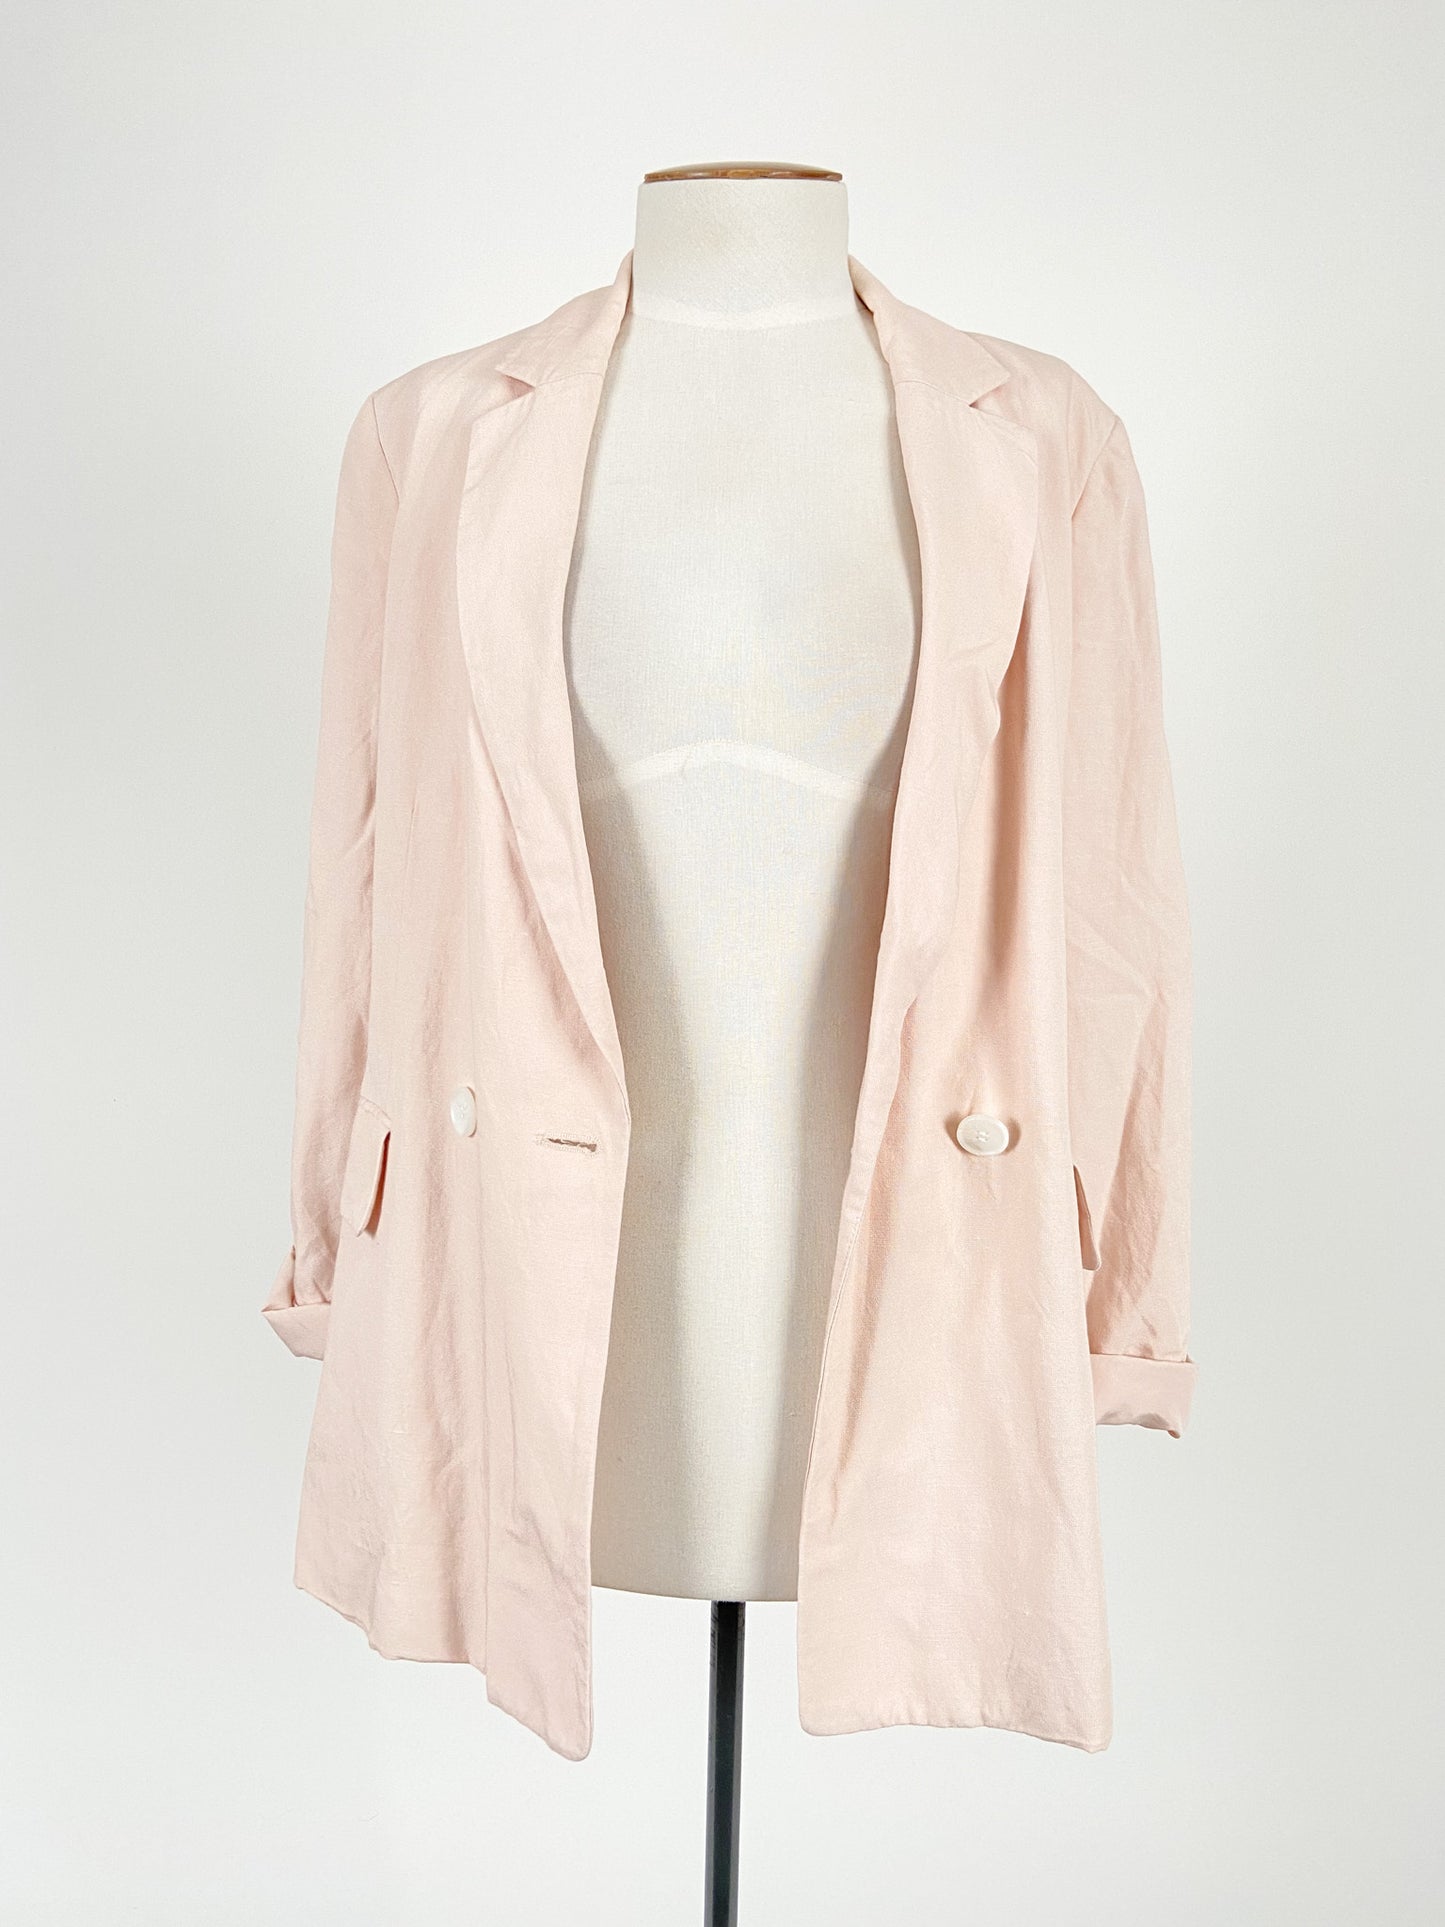 H&M | Pink Formal/Workwear Jacket | Size 8